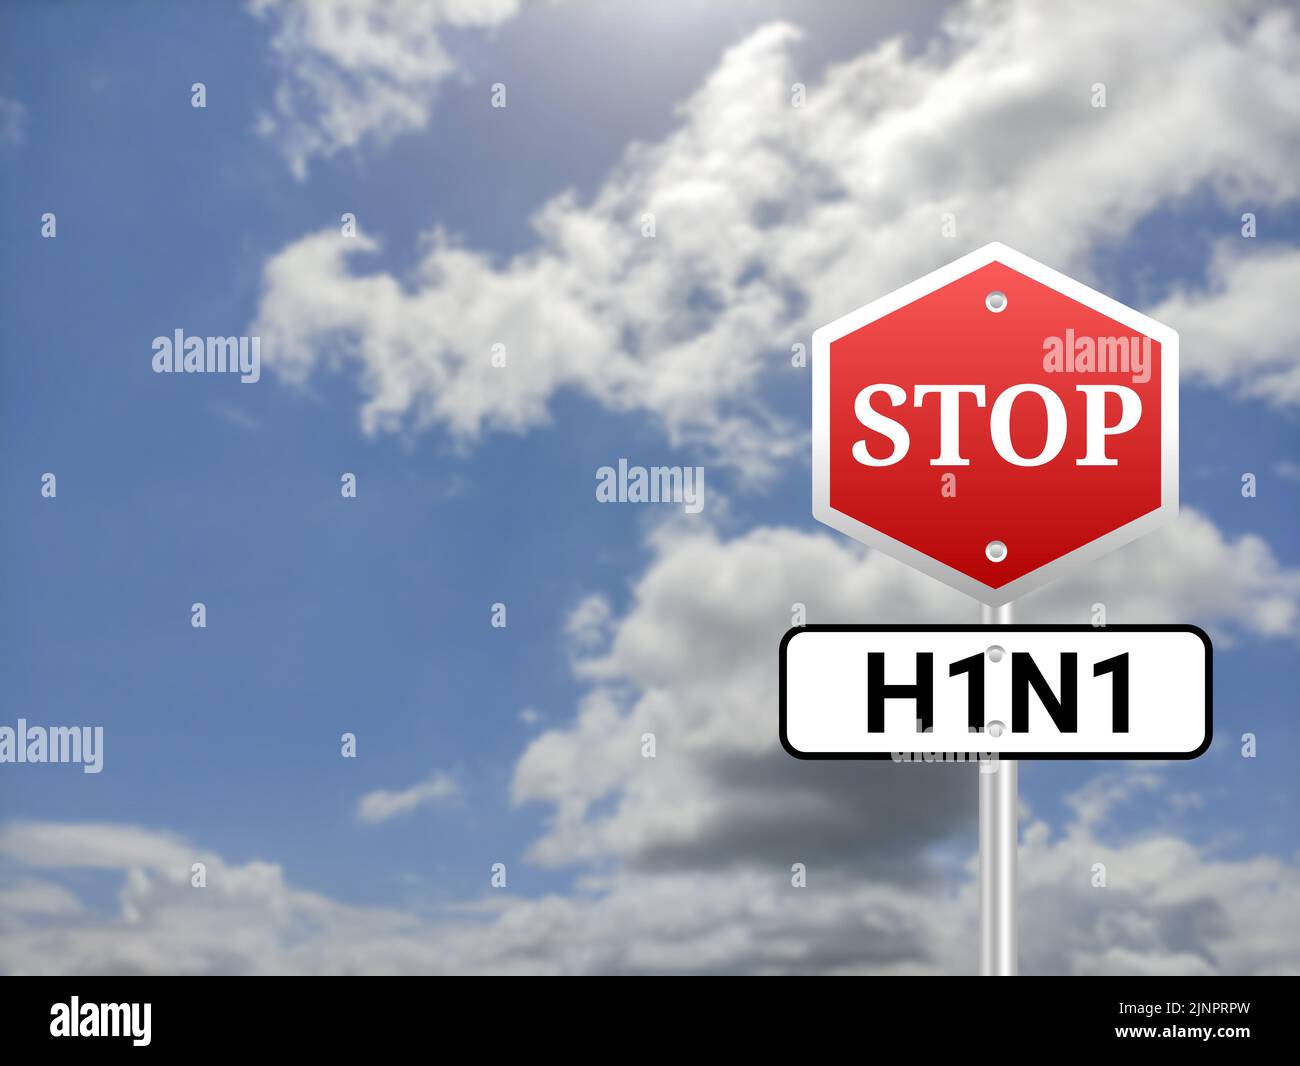 Stop H1N1 sigh board on blur sky background. influenza virus spread in winter season, illness and head pain. Stock Photo